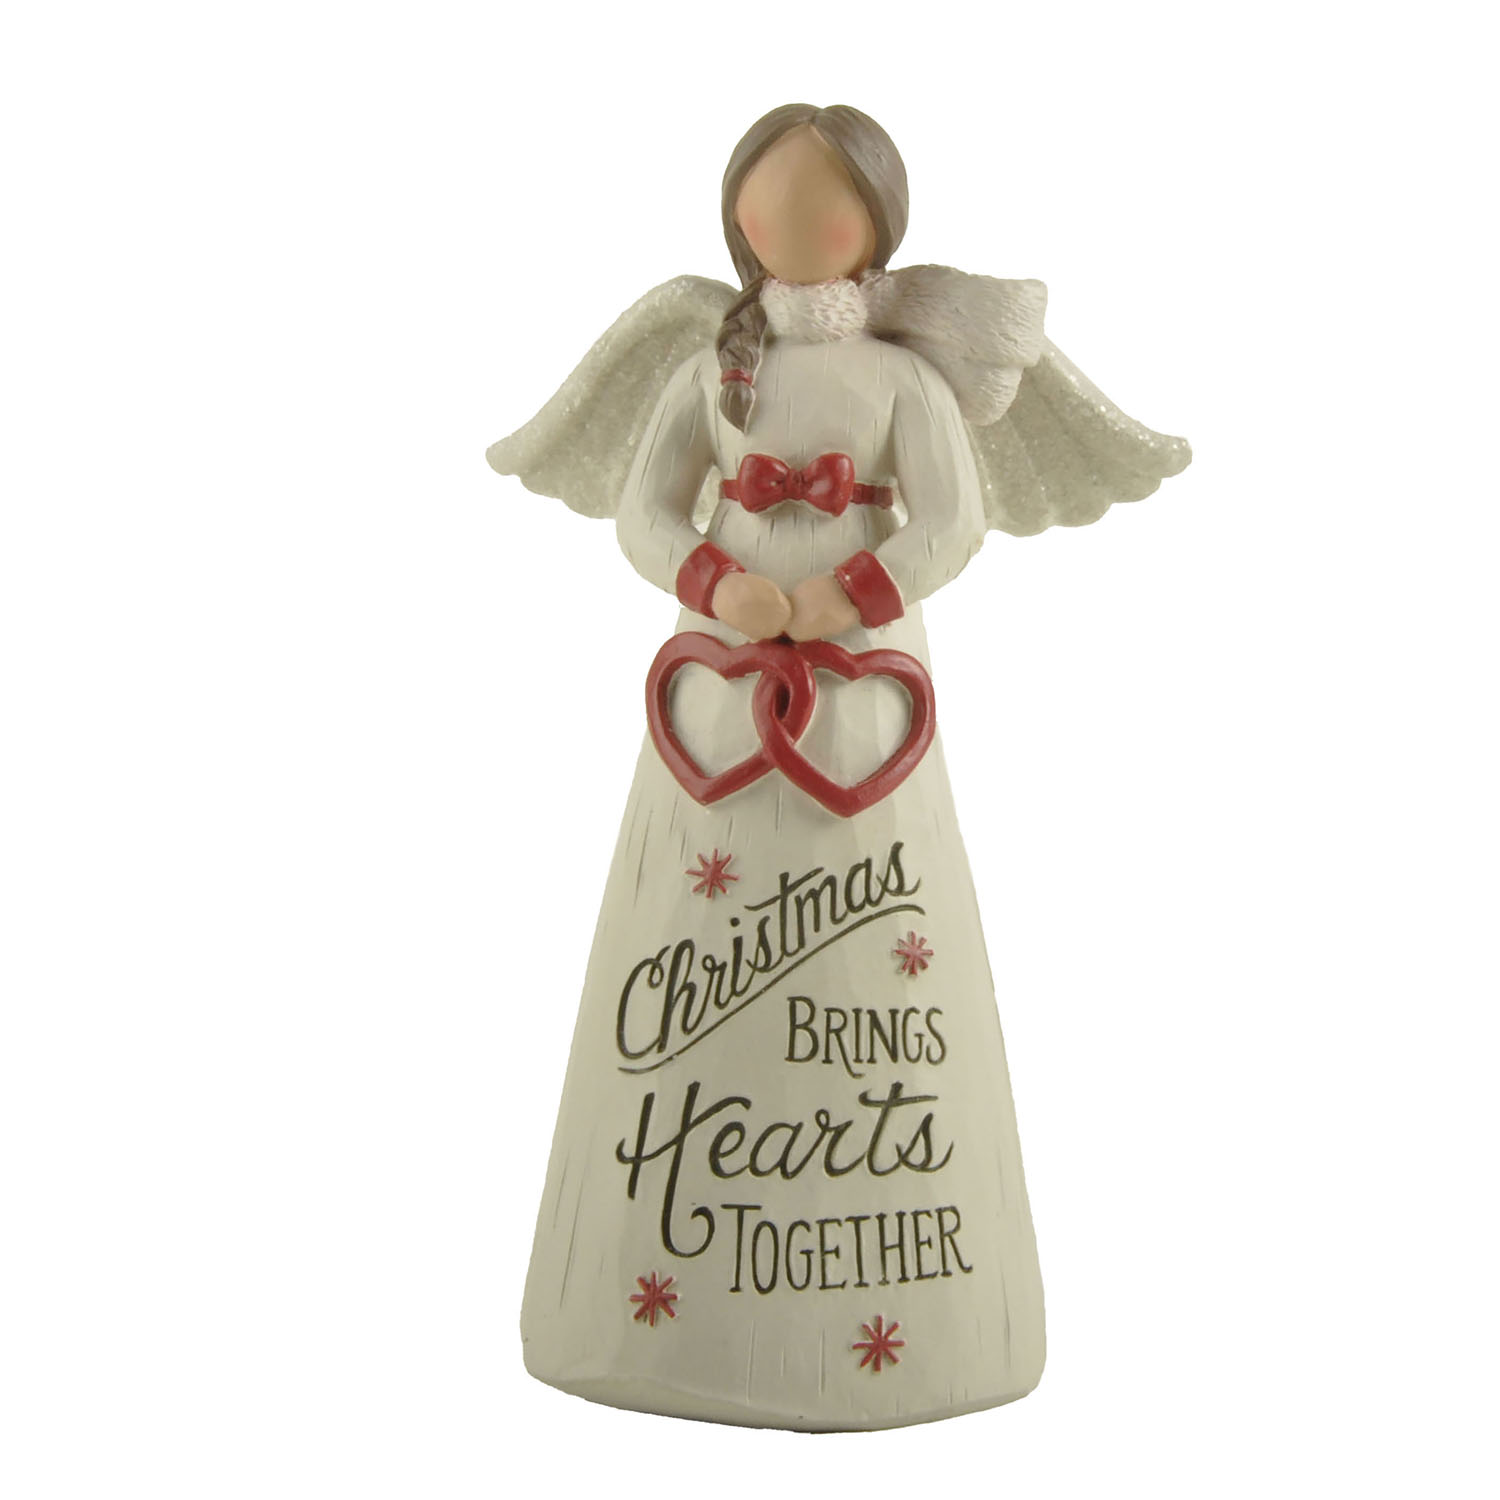 Ennas angel figurines collectible creationary best crafts